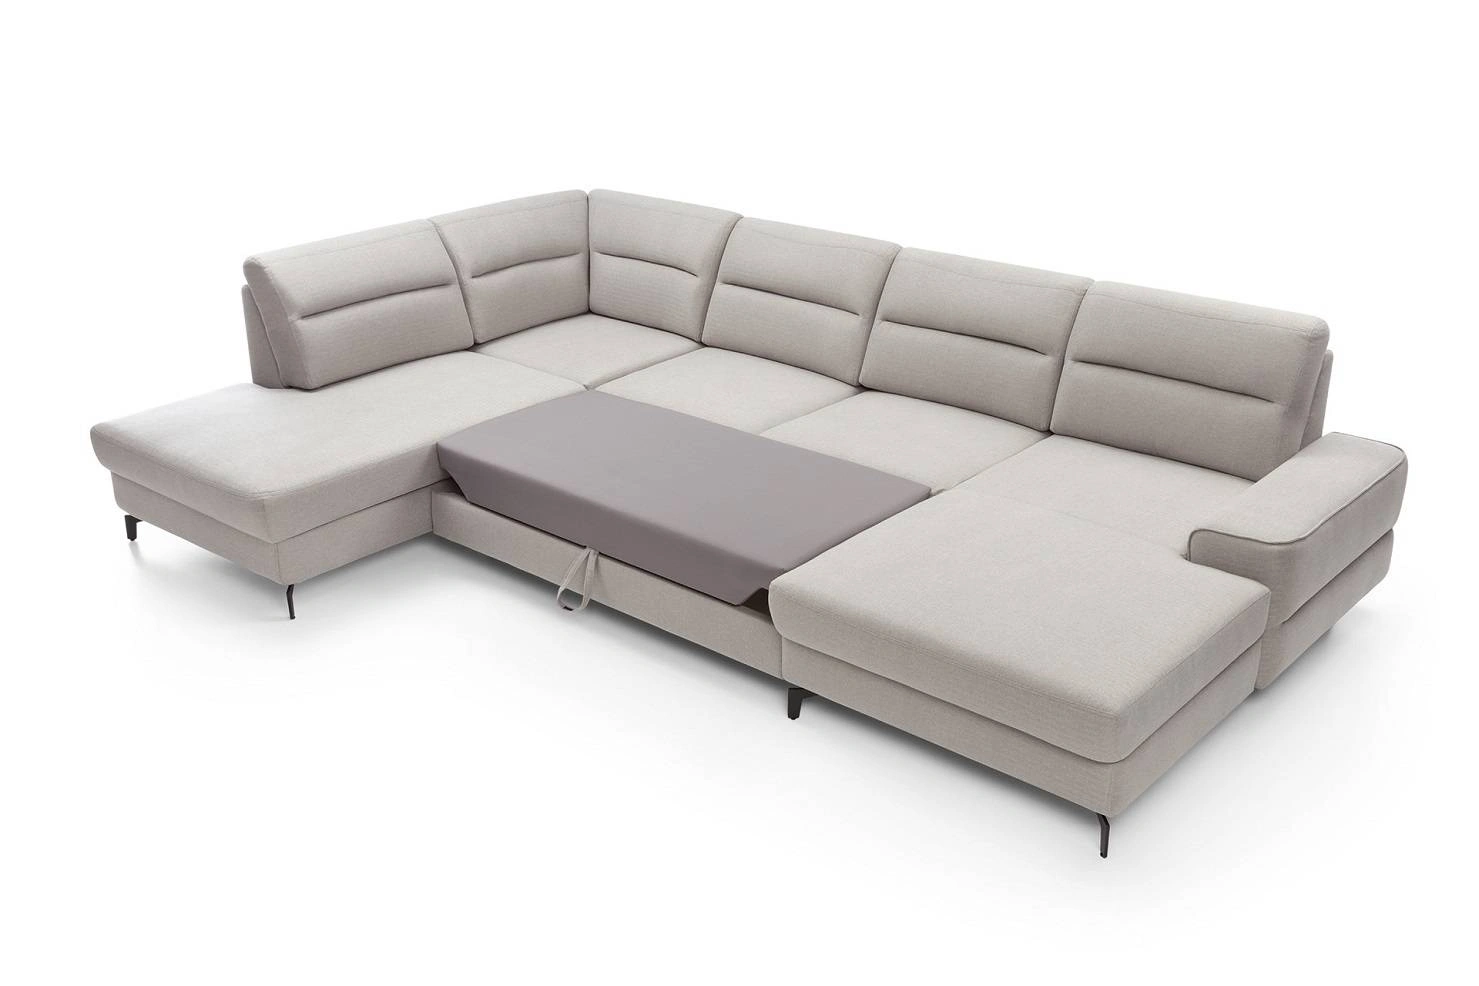 U-shaped sofa benefits